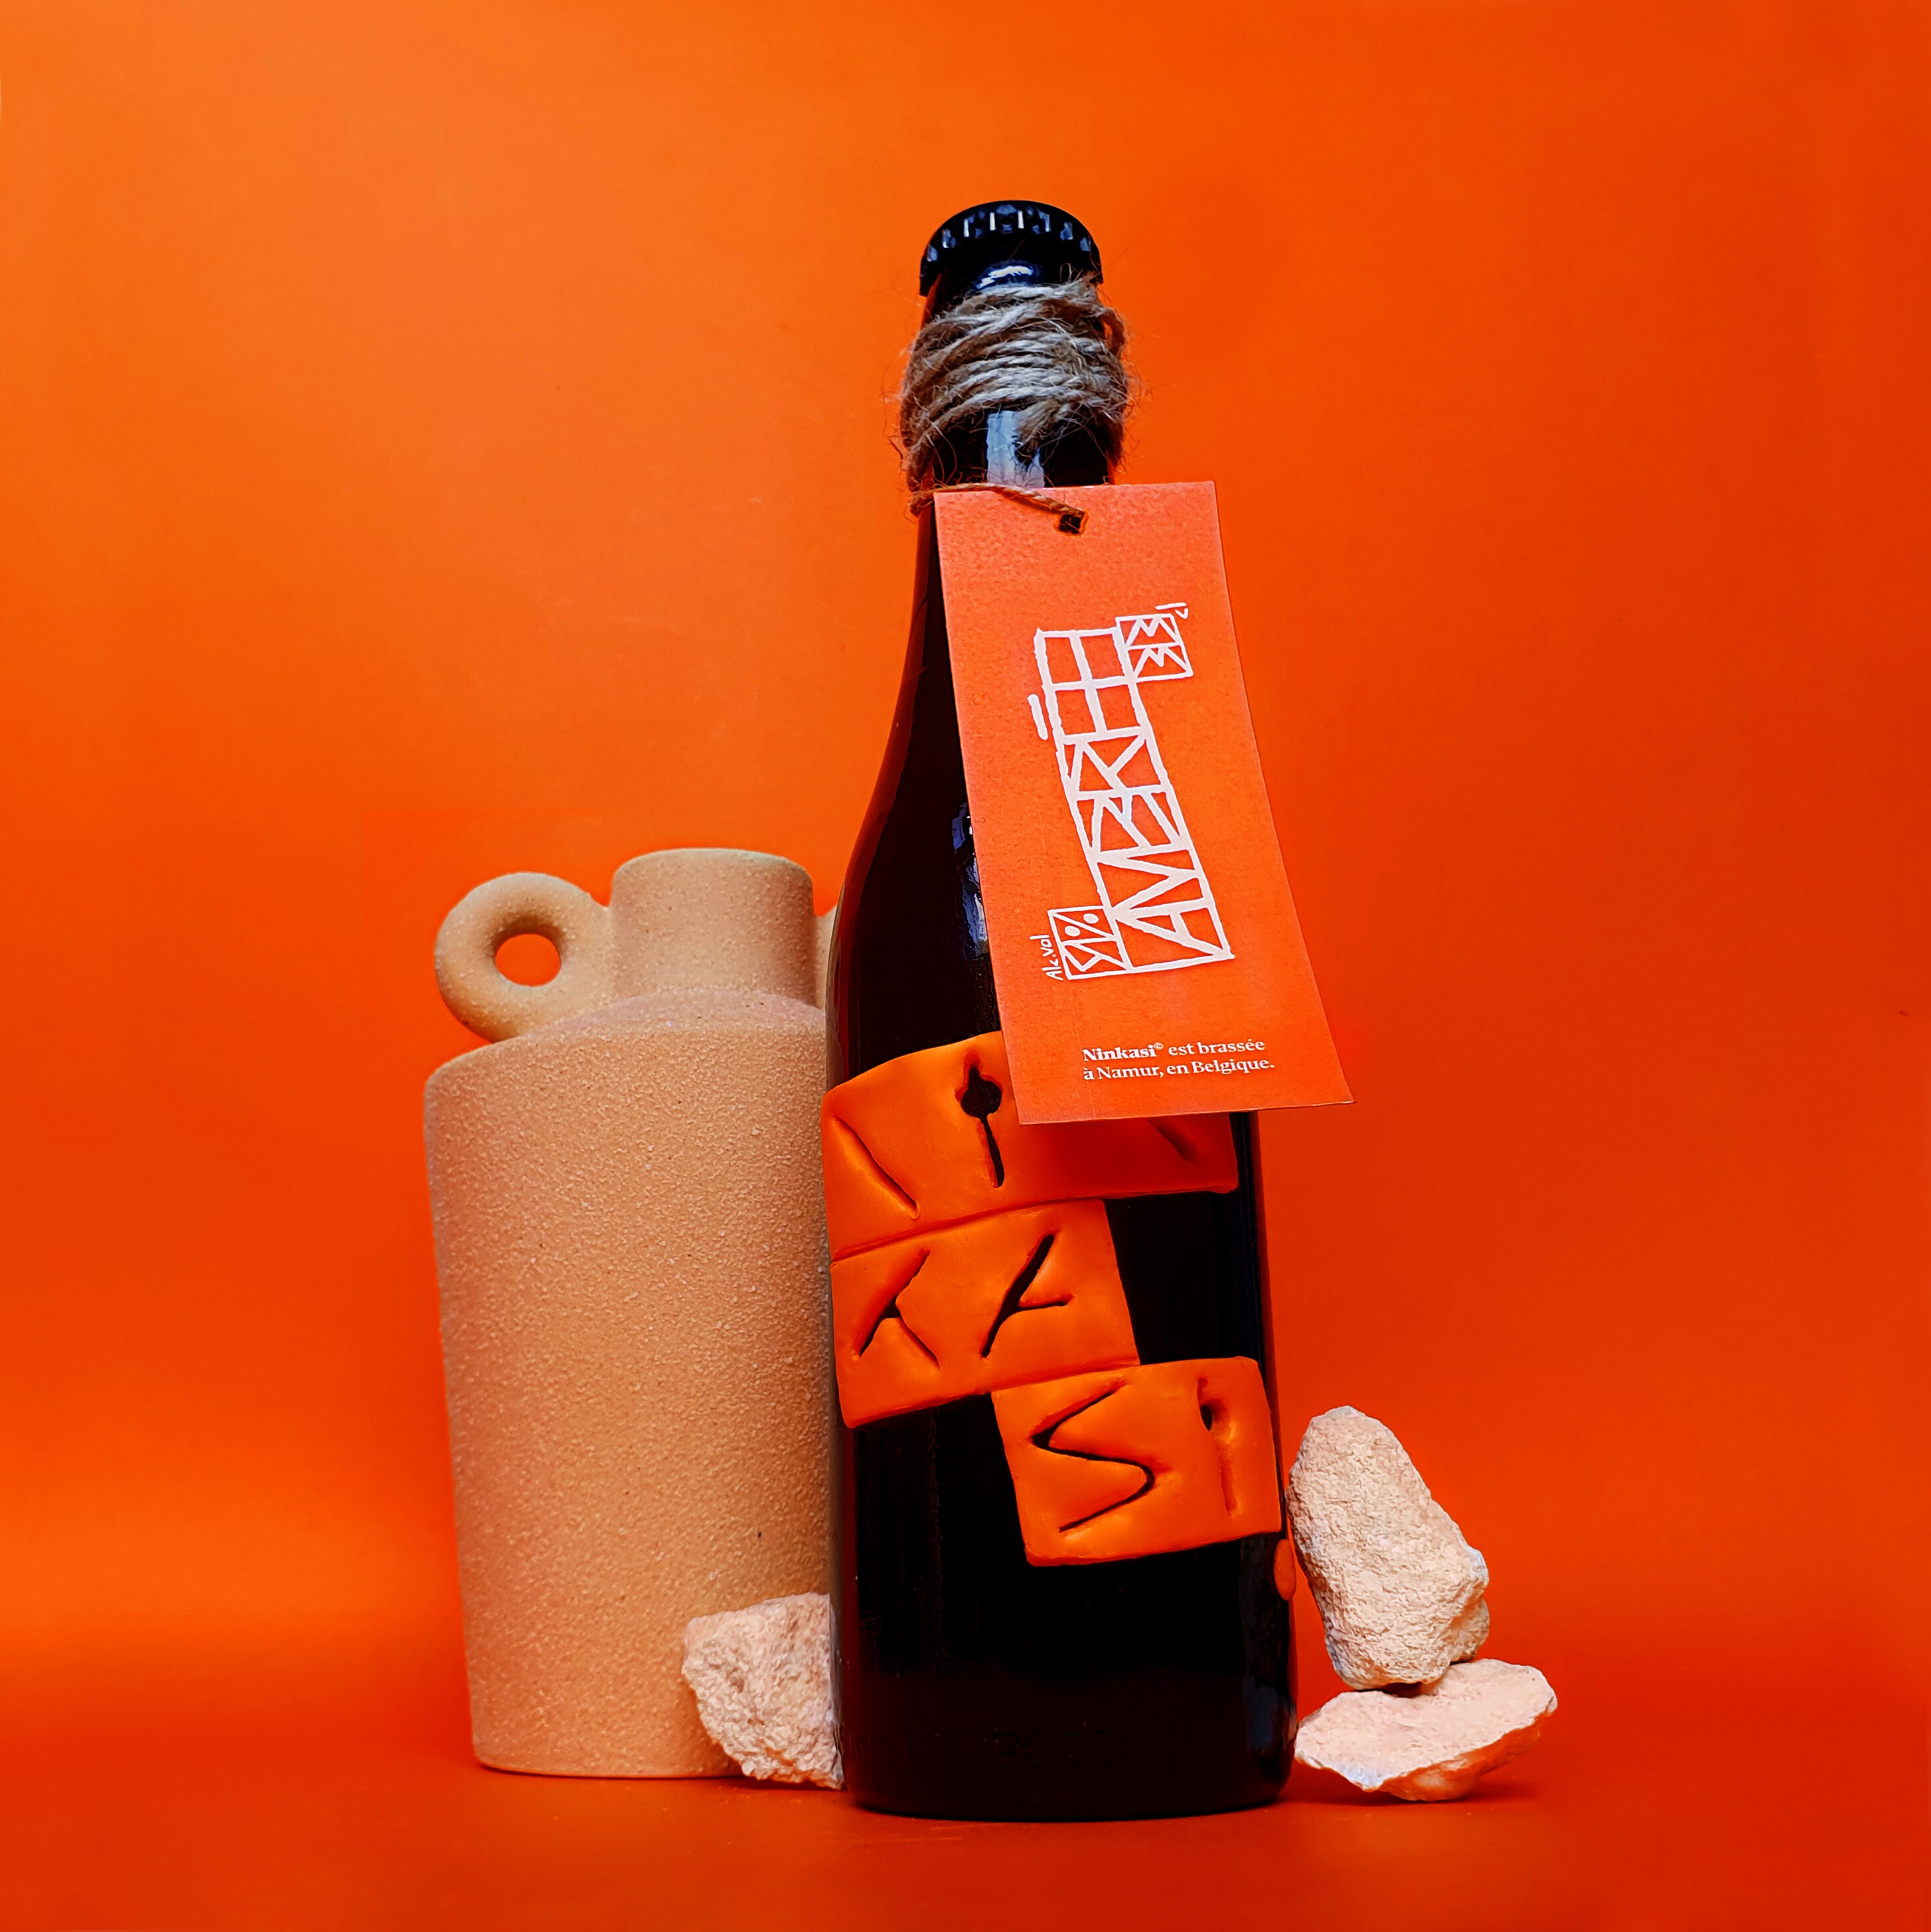 Packaging Design Concept for Ninkasi Beer – The Amber Goddess